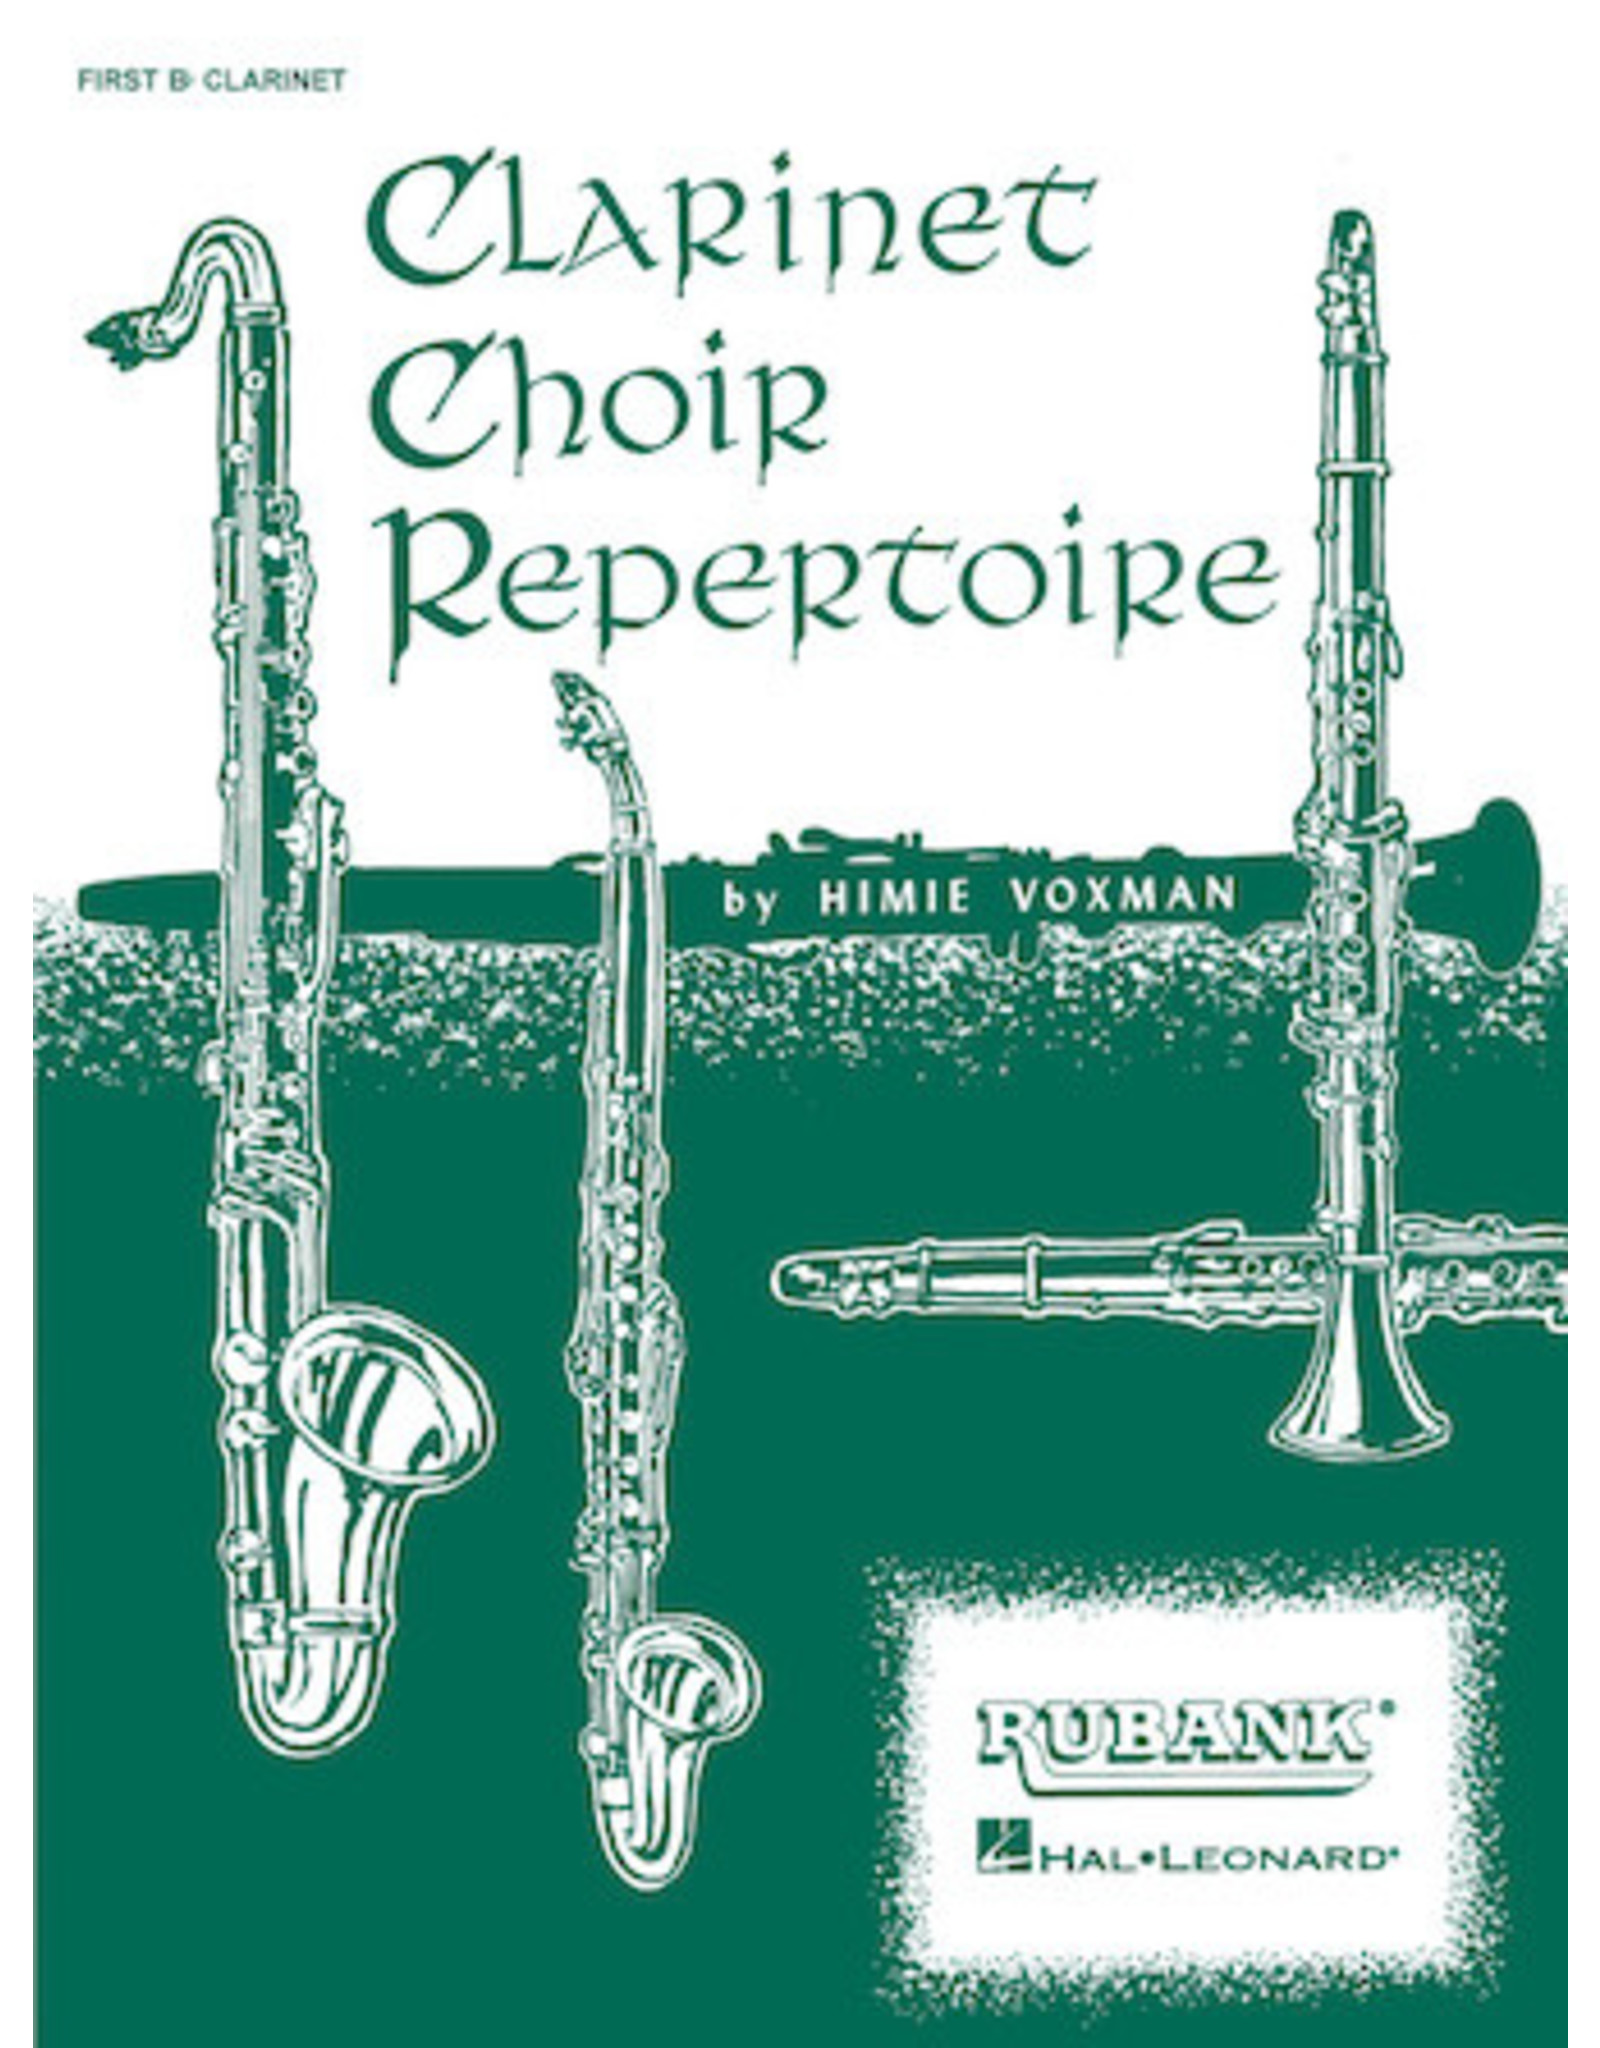 Hal Leonard Clarinet Choir Repertoire Full Score ed. H. Voxman Ensemble Collection